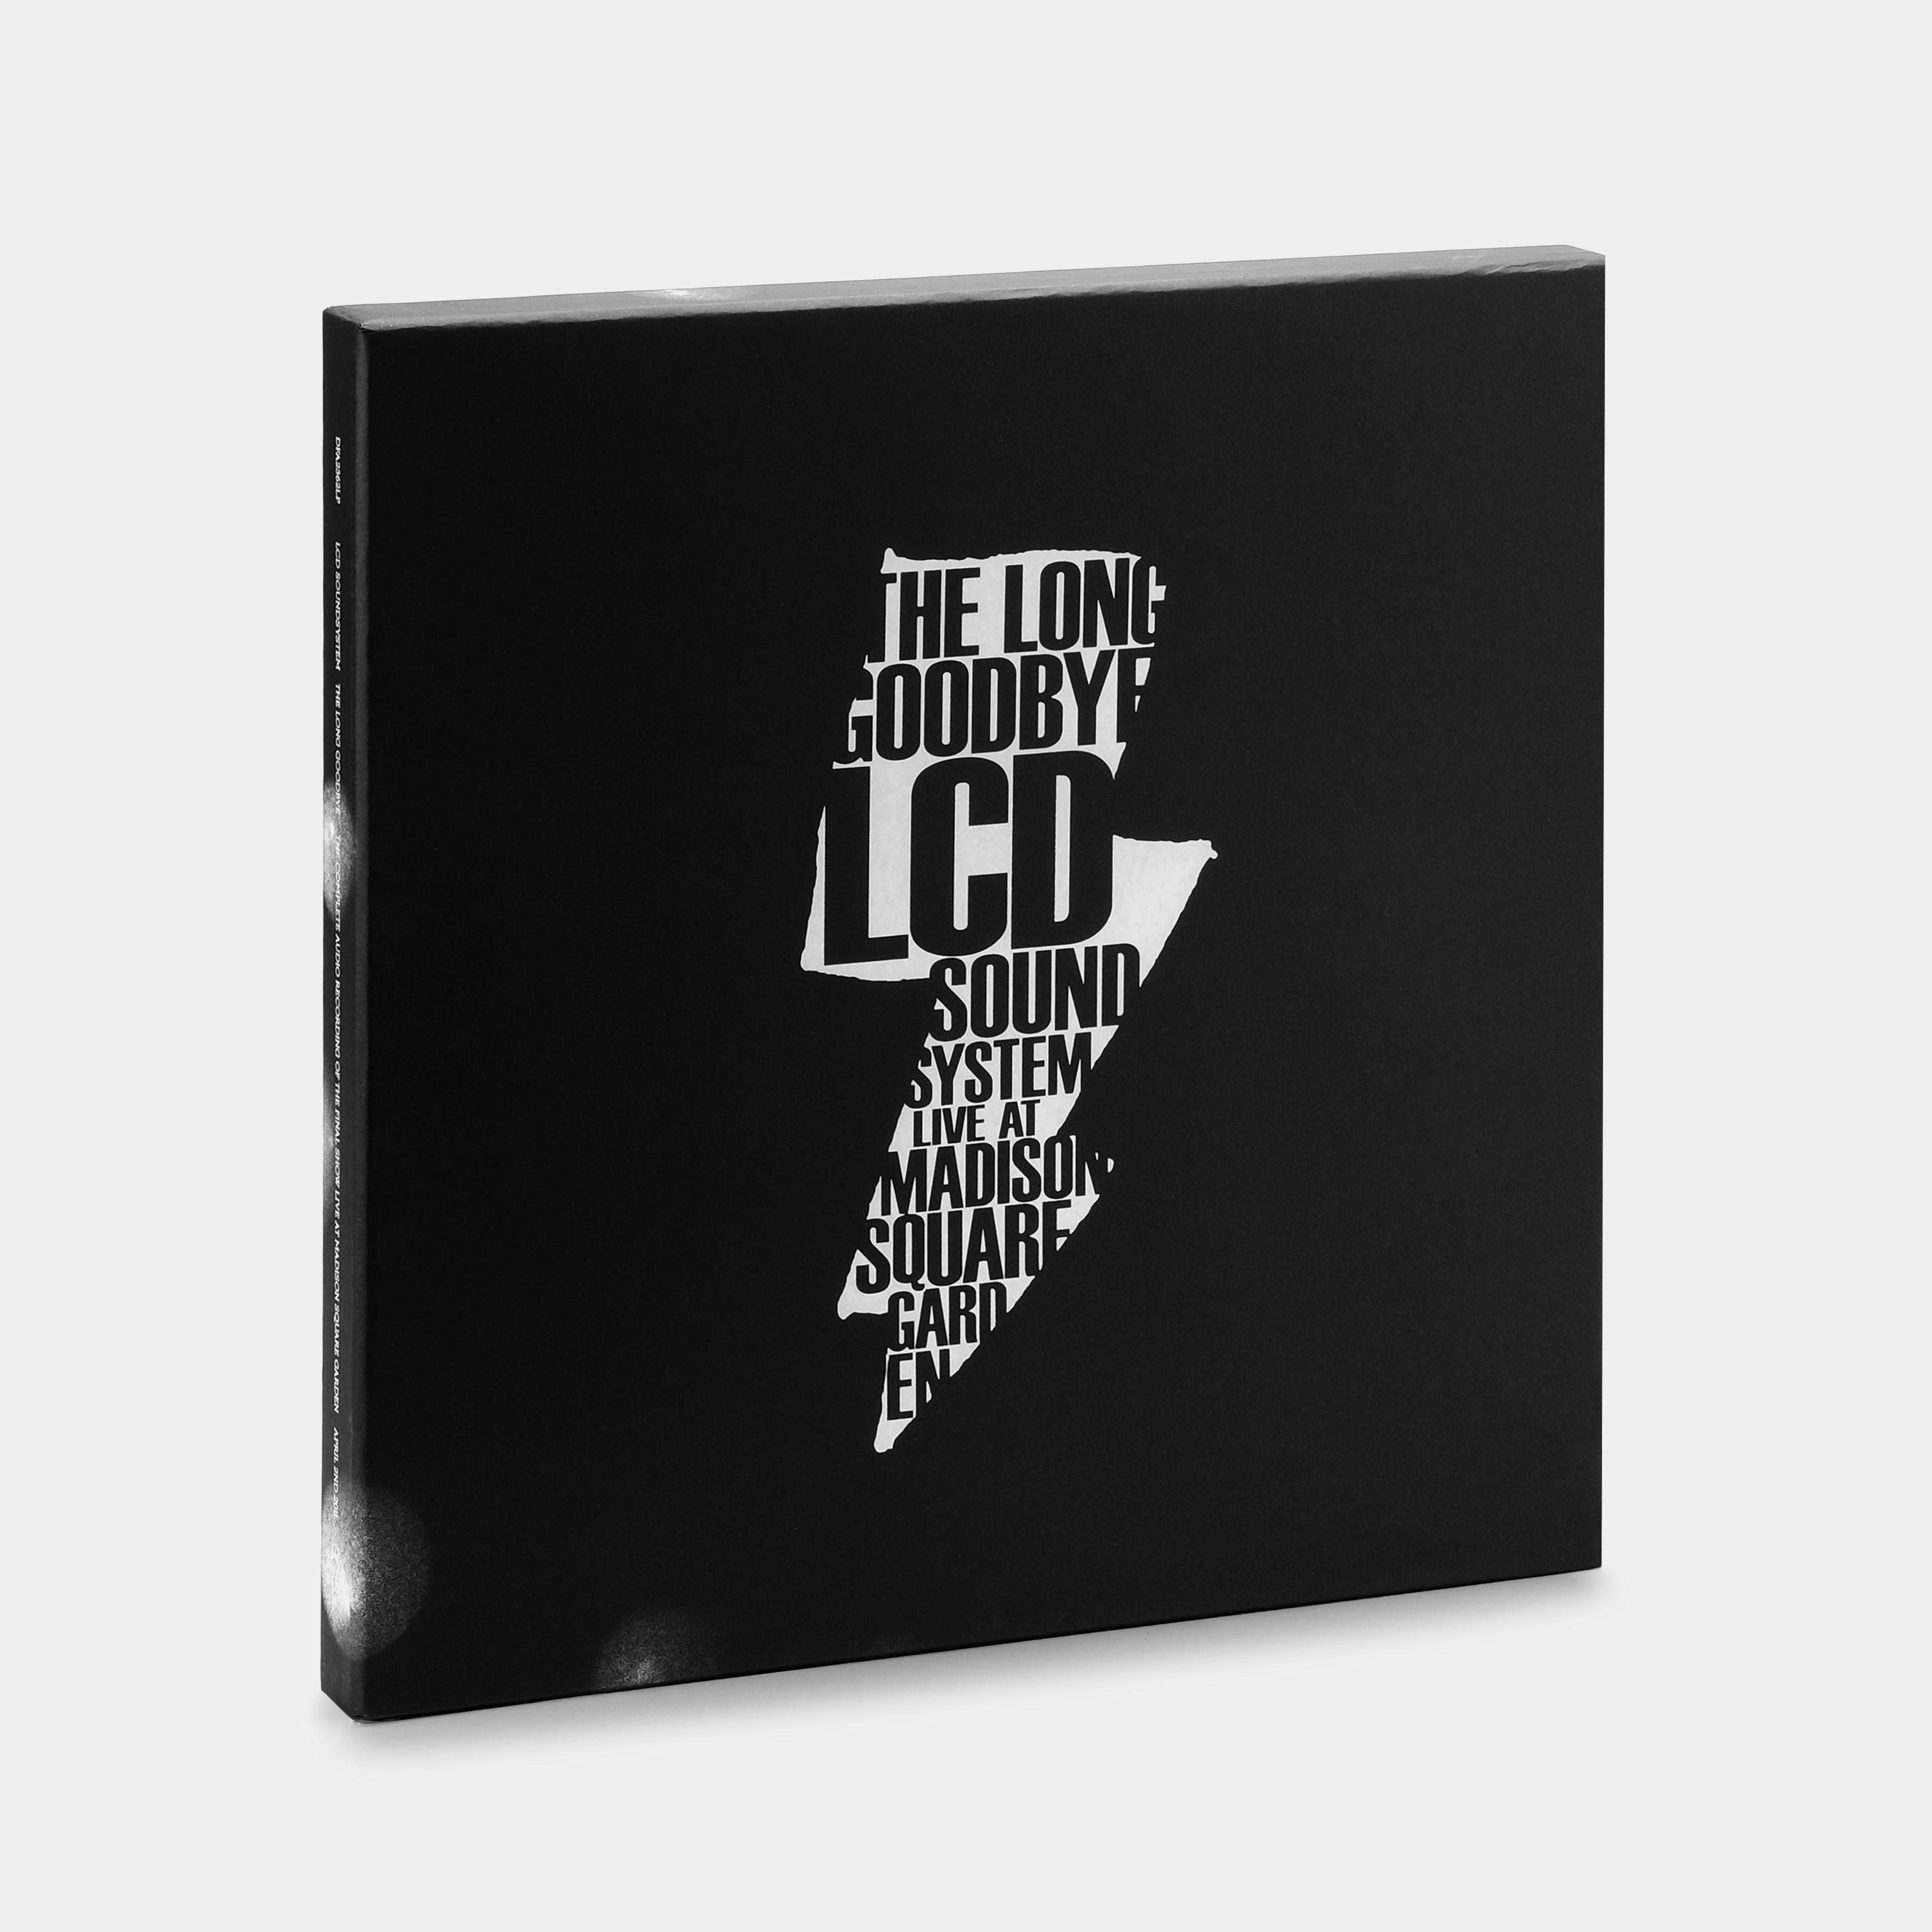 LCD Soundsystem - The Long Goodbye (Live At Madison Square Garden) 5xLP Vinyl Record